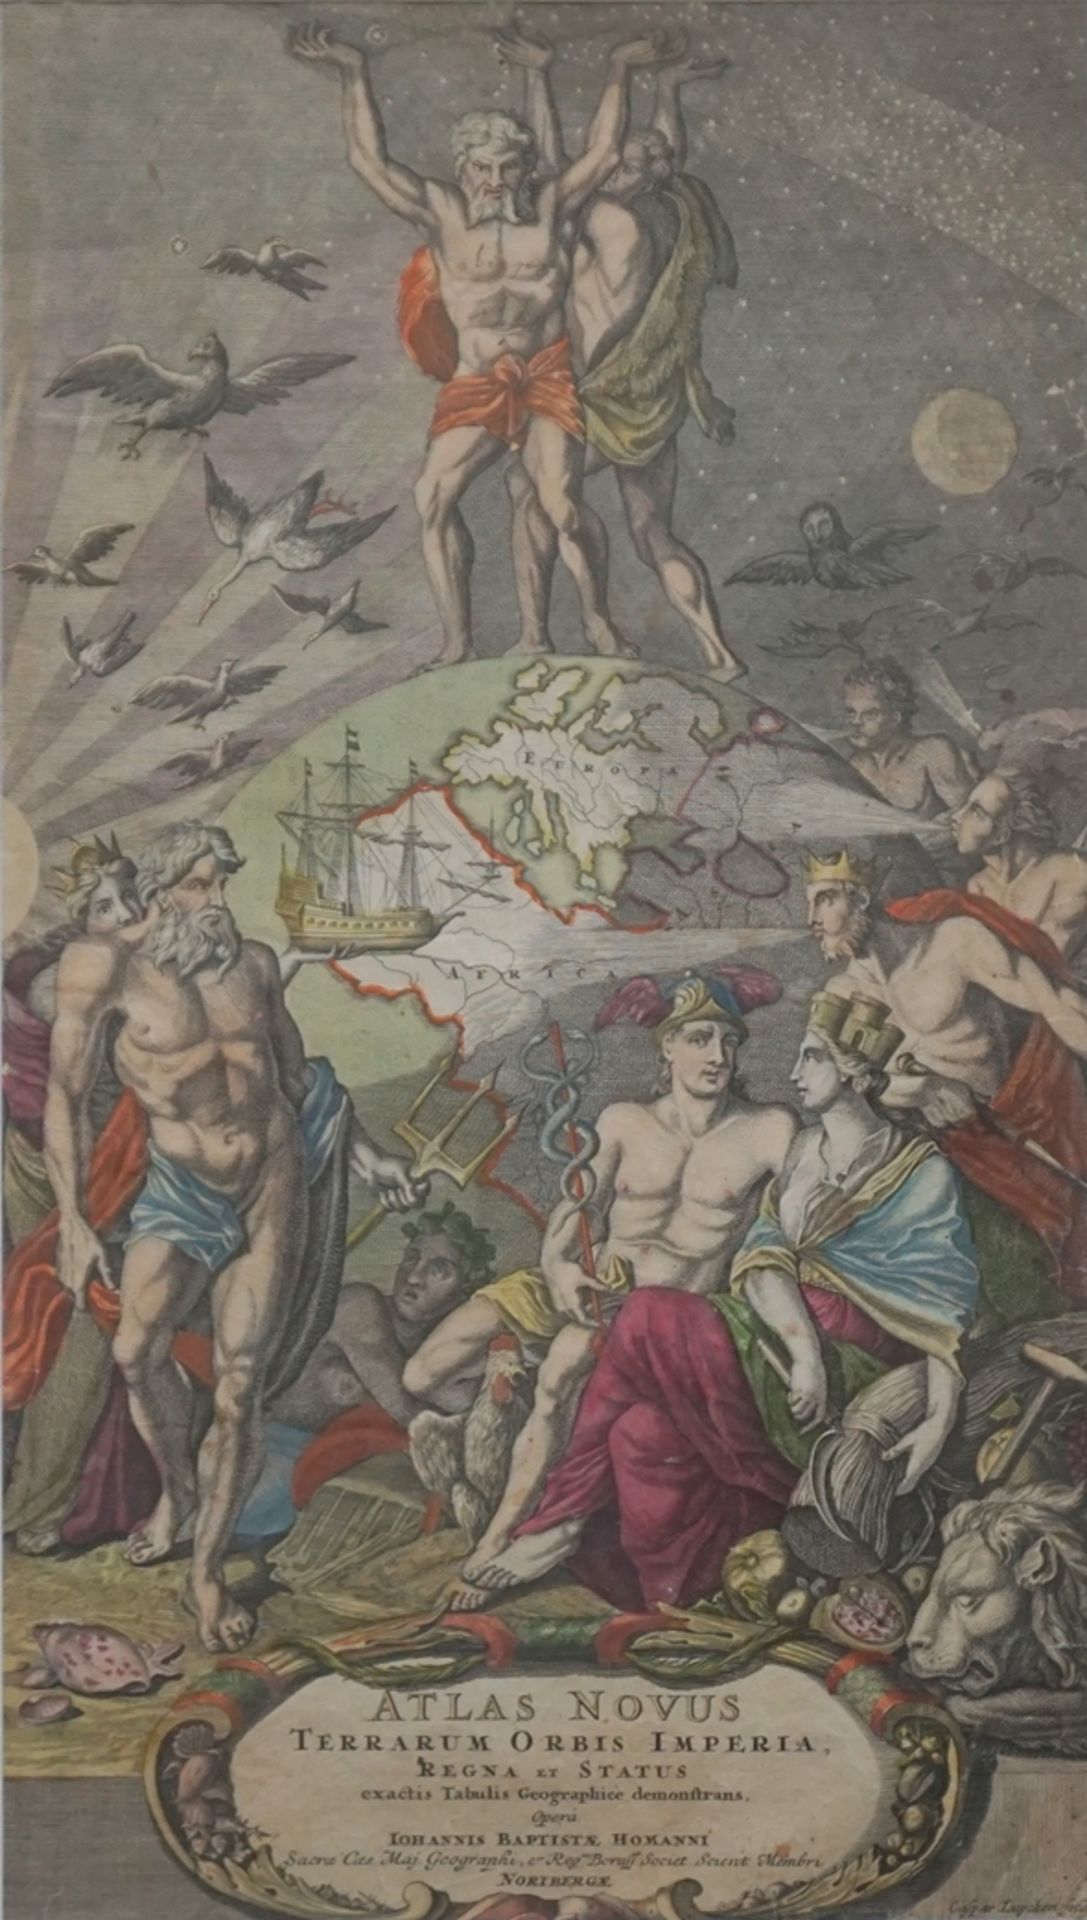 Johann Baptist Homann (1664, Oberkammlach - 1724, Nürnberg), "Atlas novus terrarum orbis imperia", - Image 2 of 3